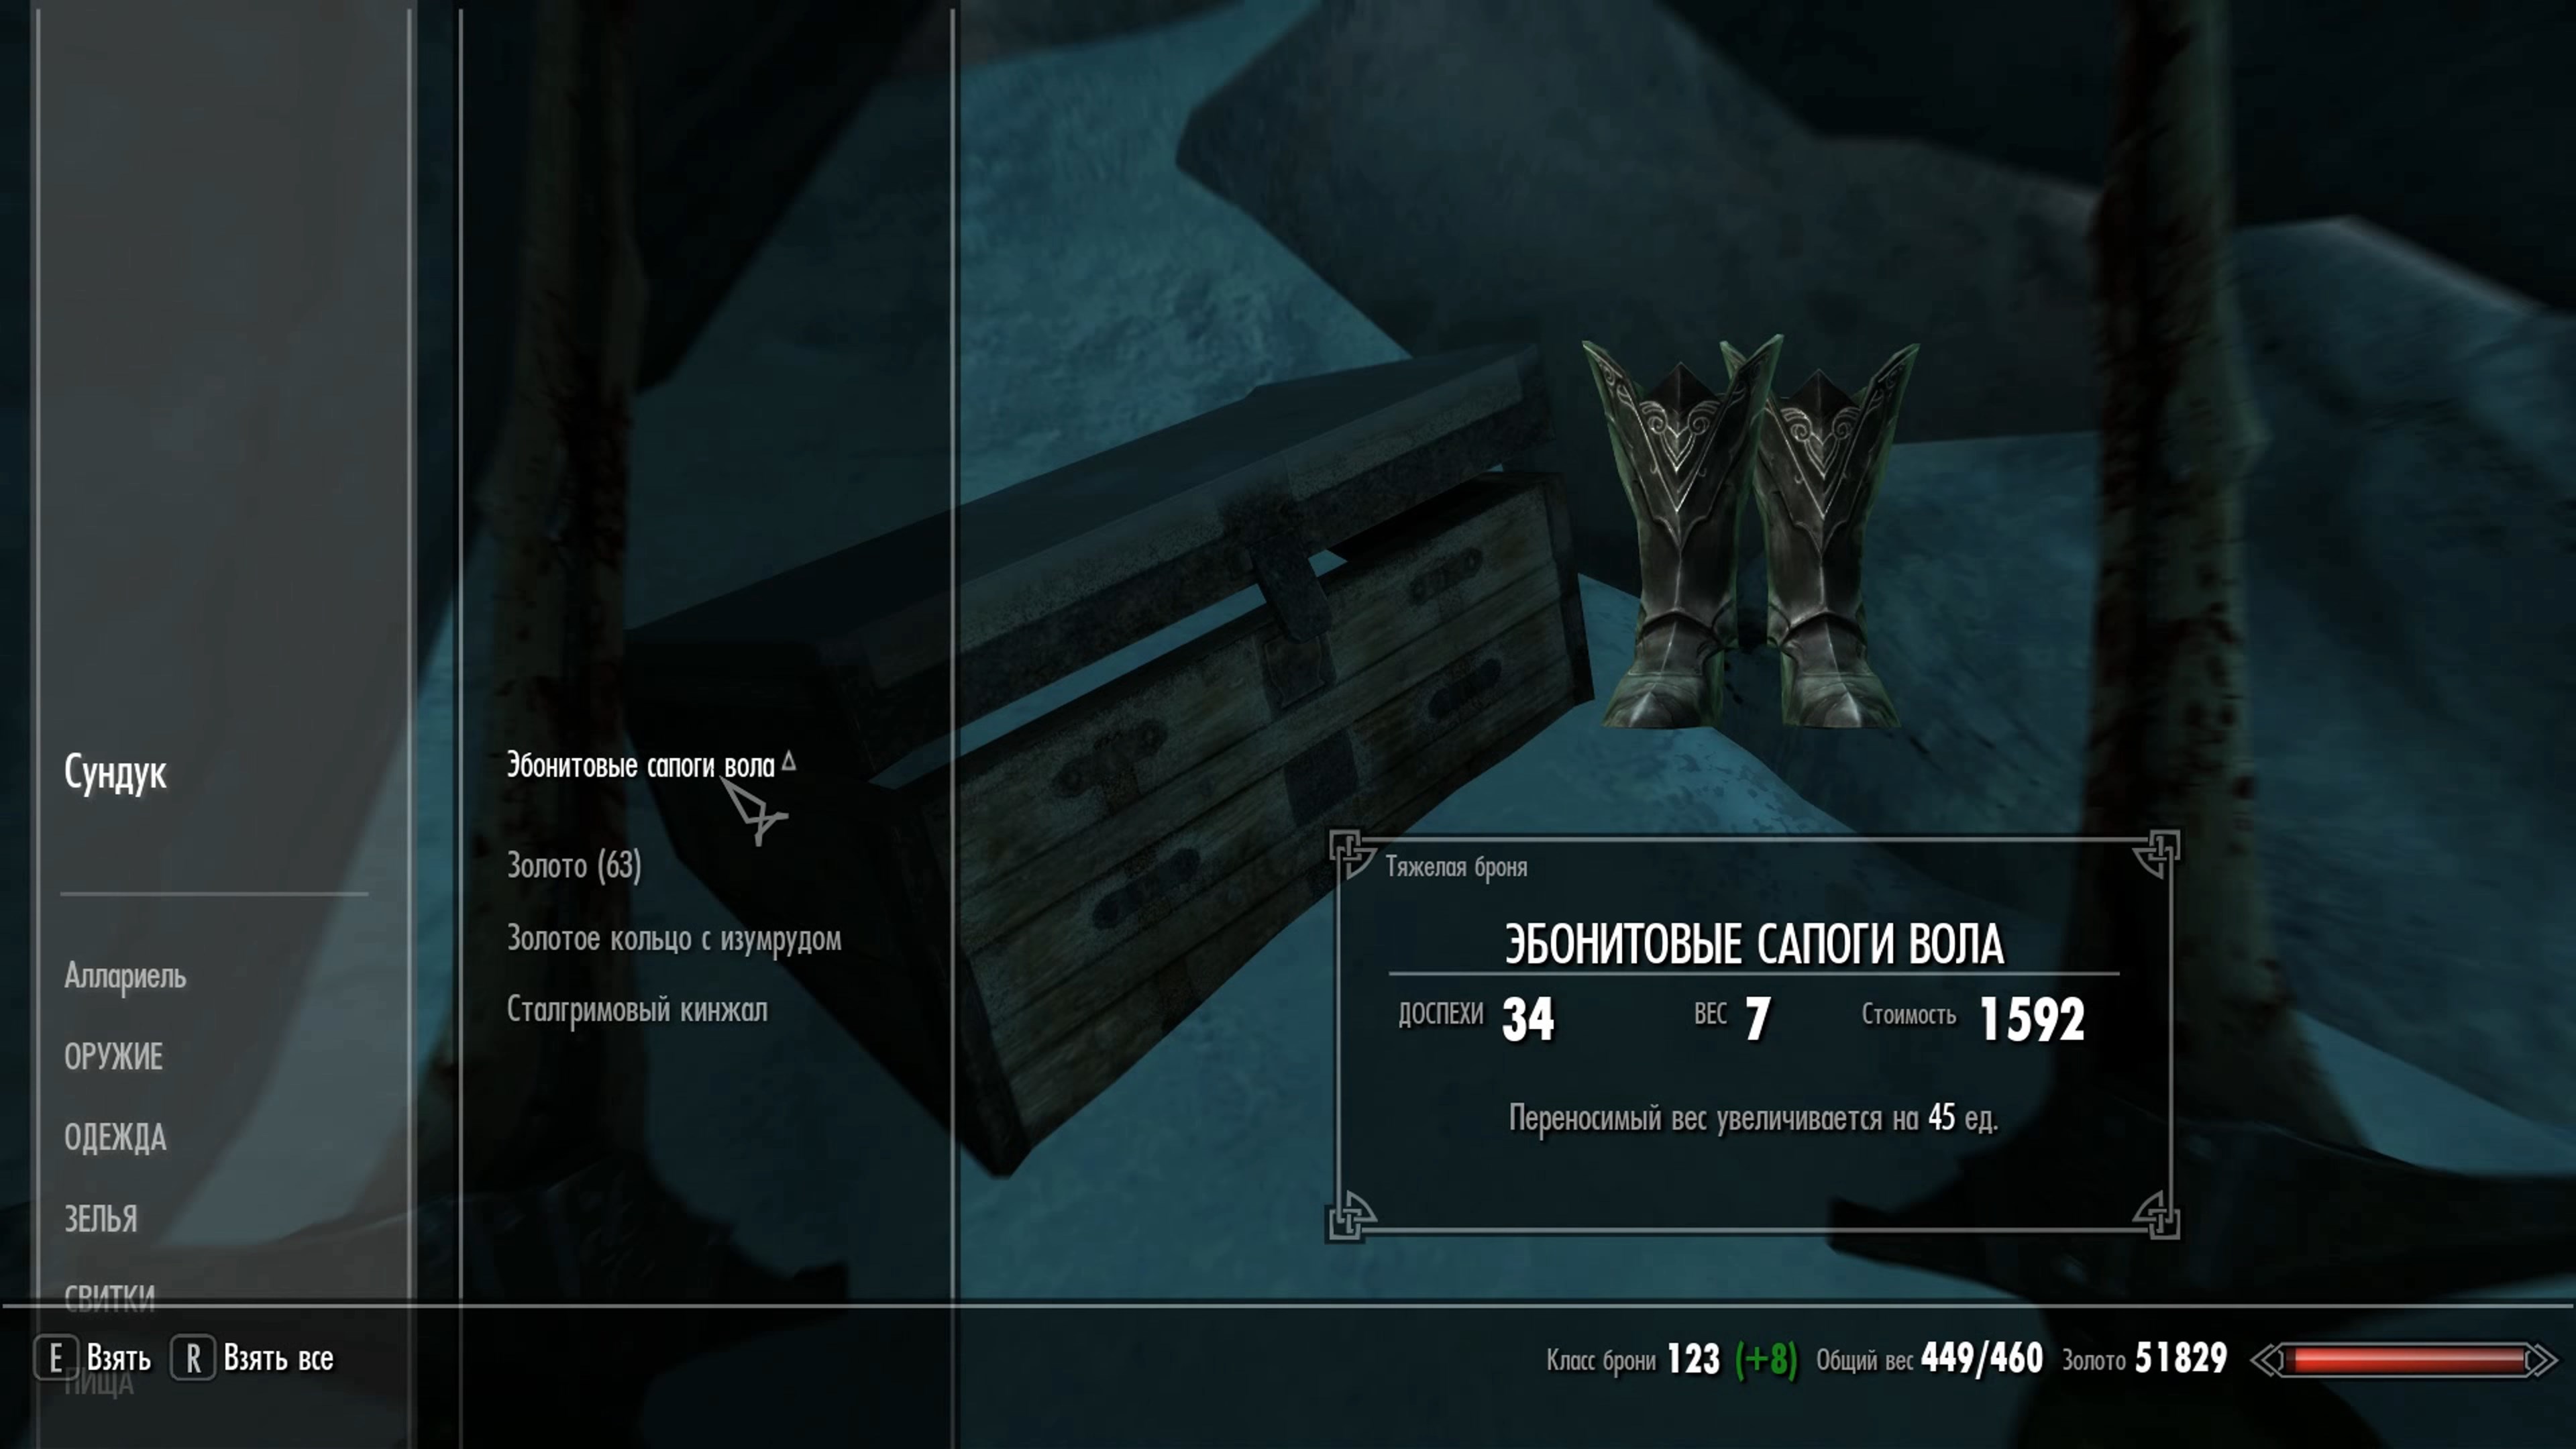 The Elder Scrolls V: Skyrim скриншот (фото)